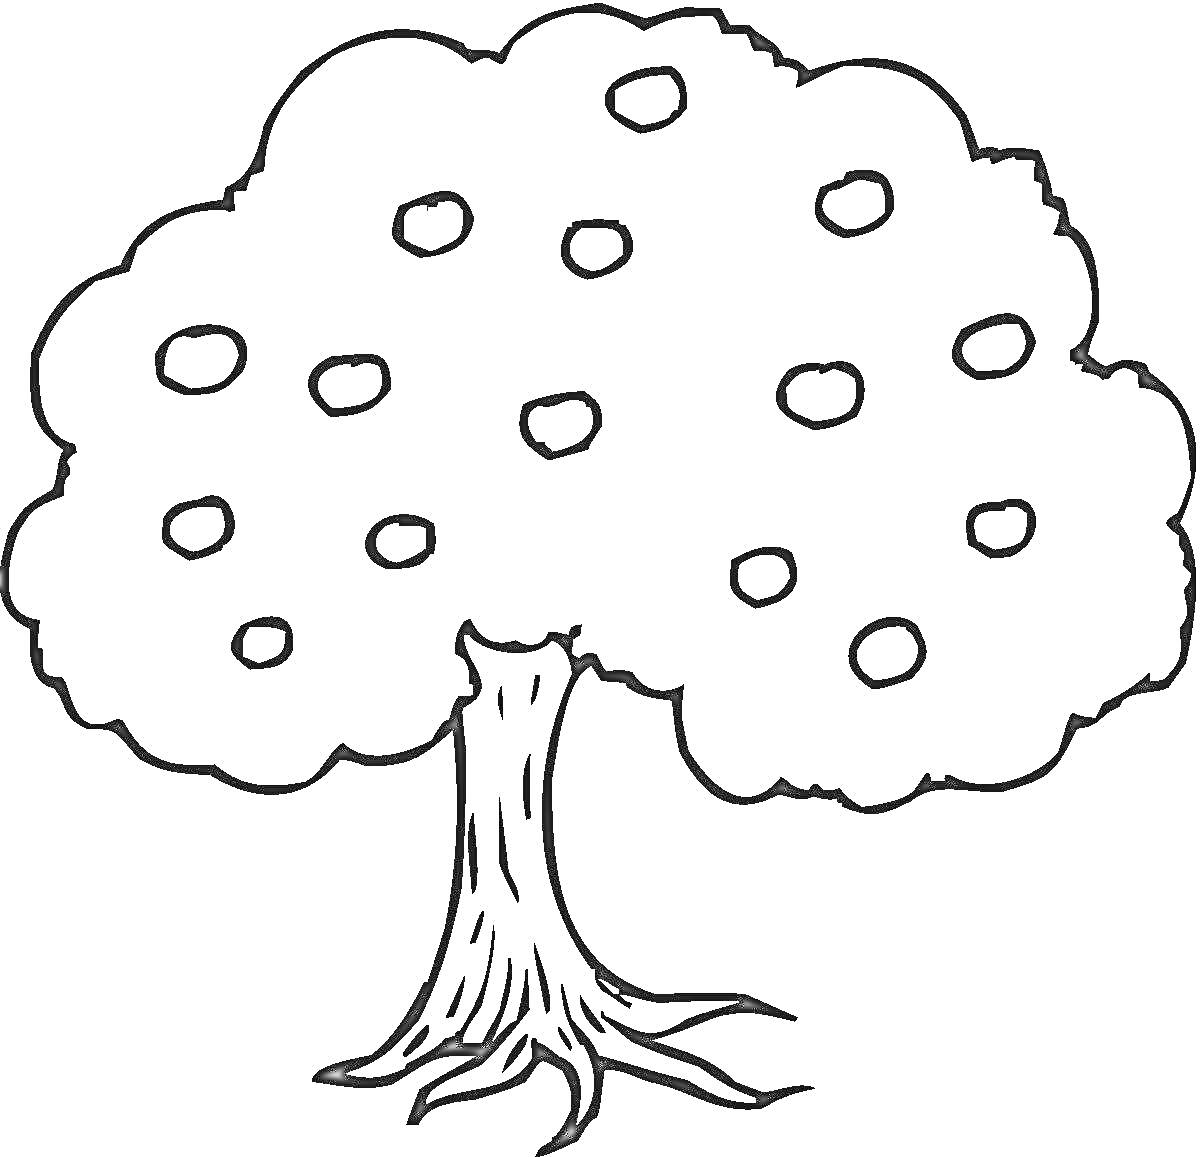 Раскраска Дерево с кружочками на листве